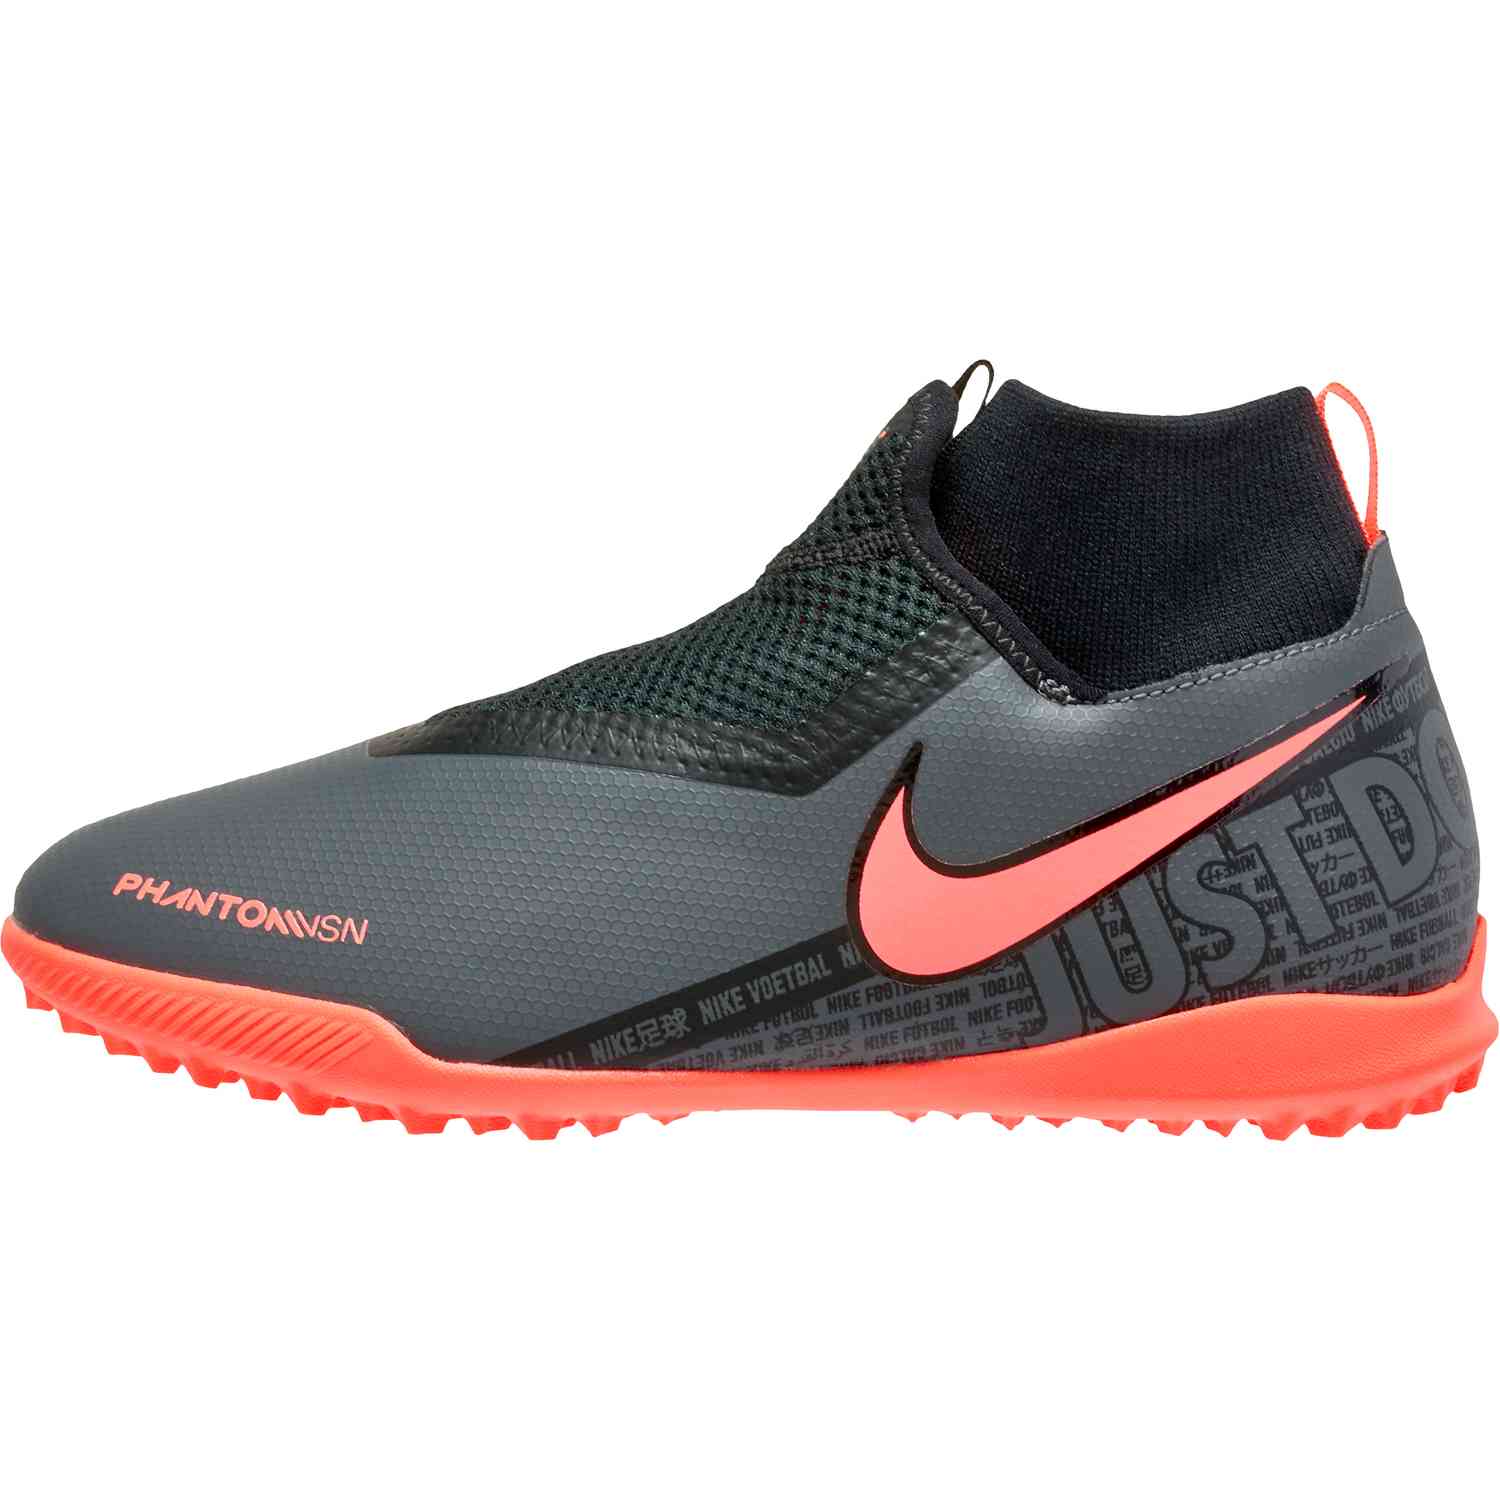 Nike Phantom Vision Pro DF AG Pro Mens Boots Artificial Grass